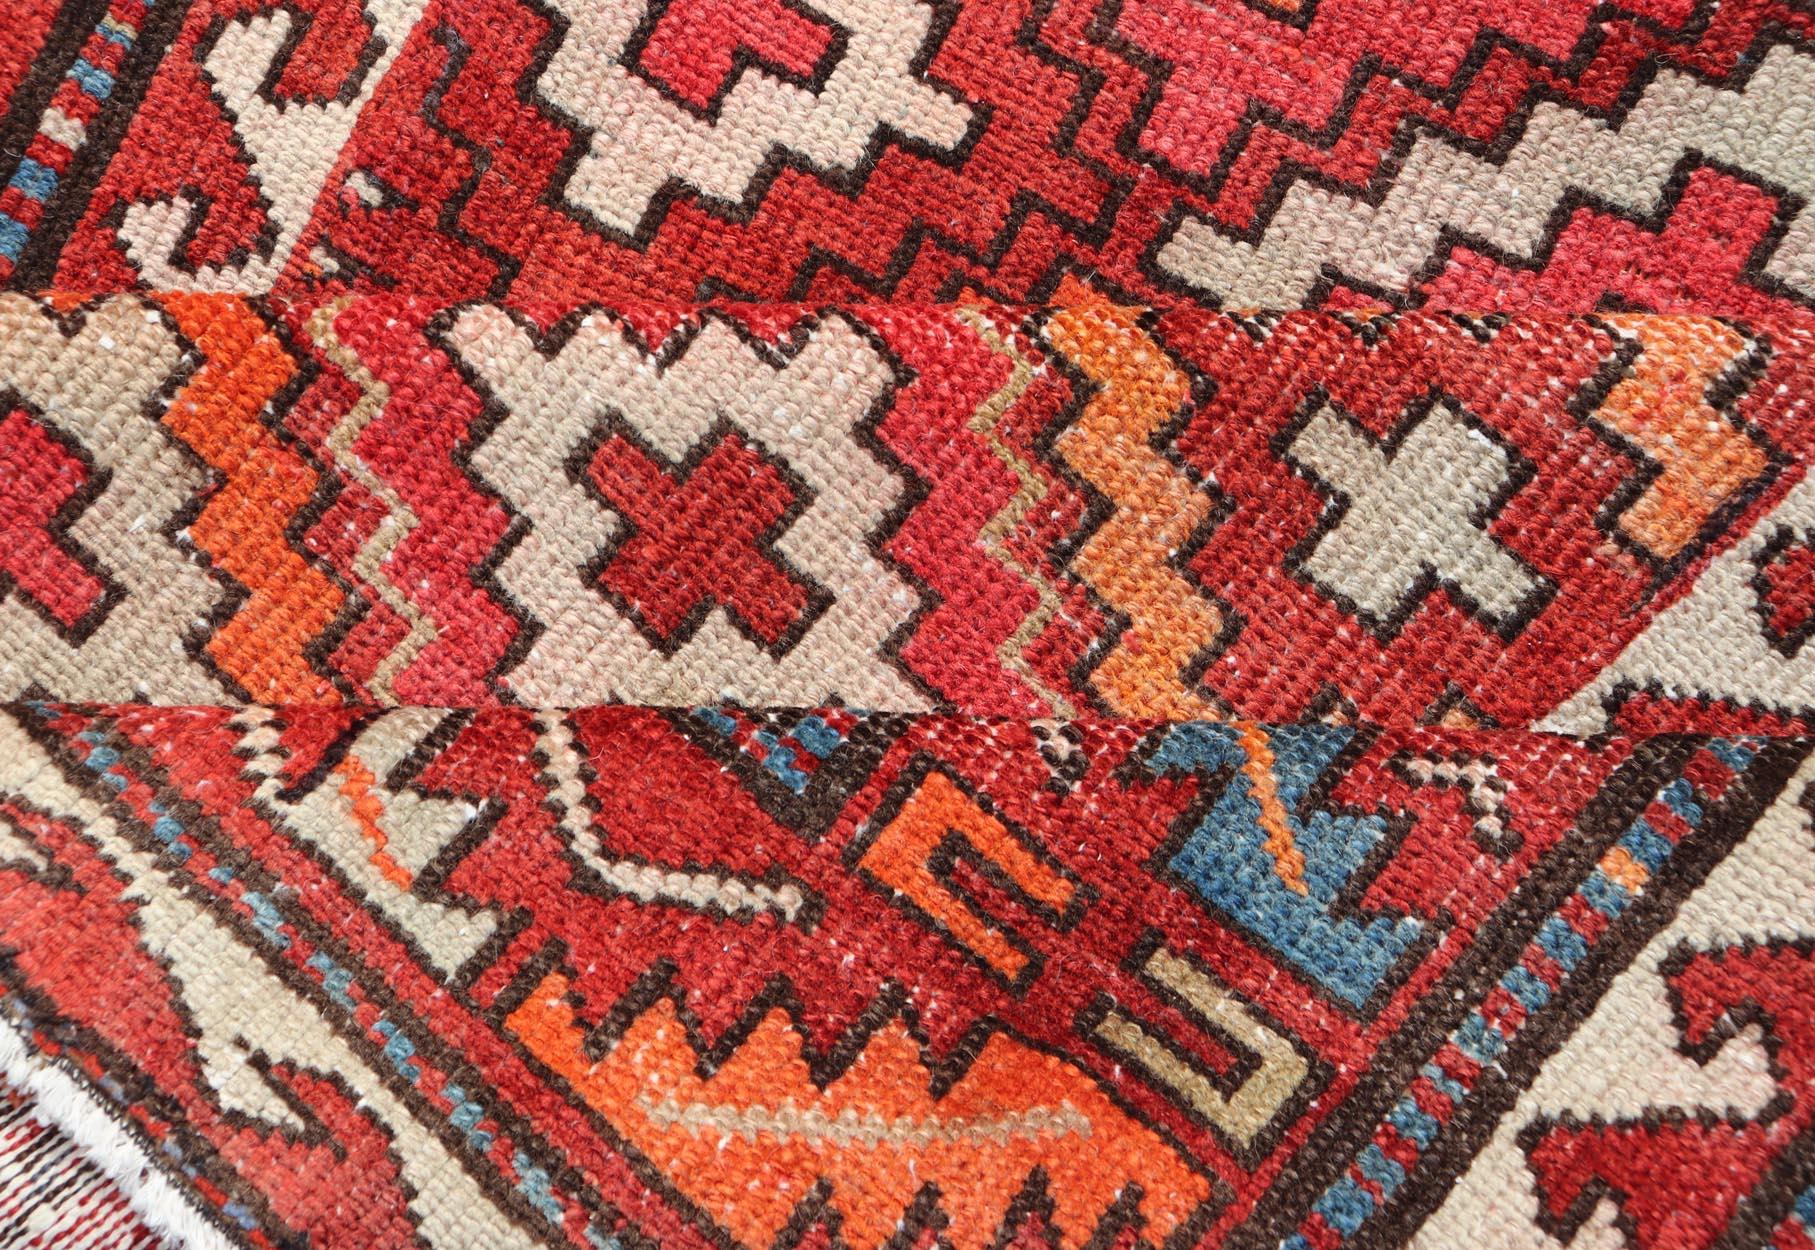 Antique Persian Fine Weave Hamadan Gallery Rug in Multi Colors in Tribal Design For Sale 2